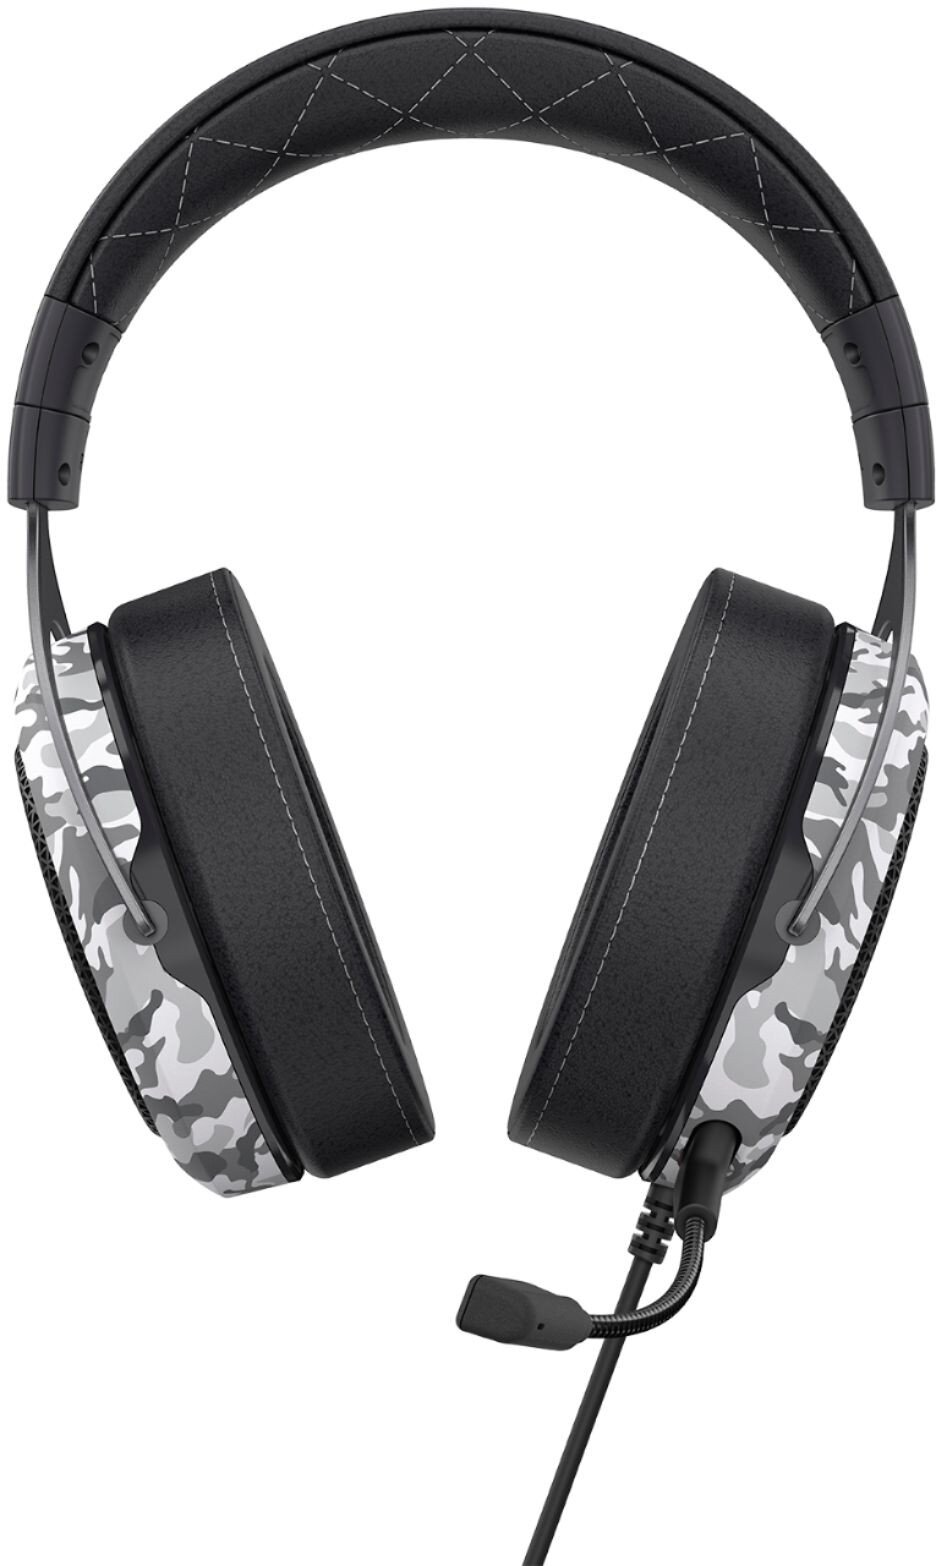 Buy Corsair HS60 Haptic Stereo Gaming Headset online Worldwide